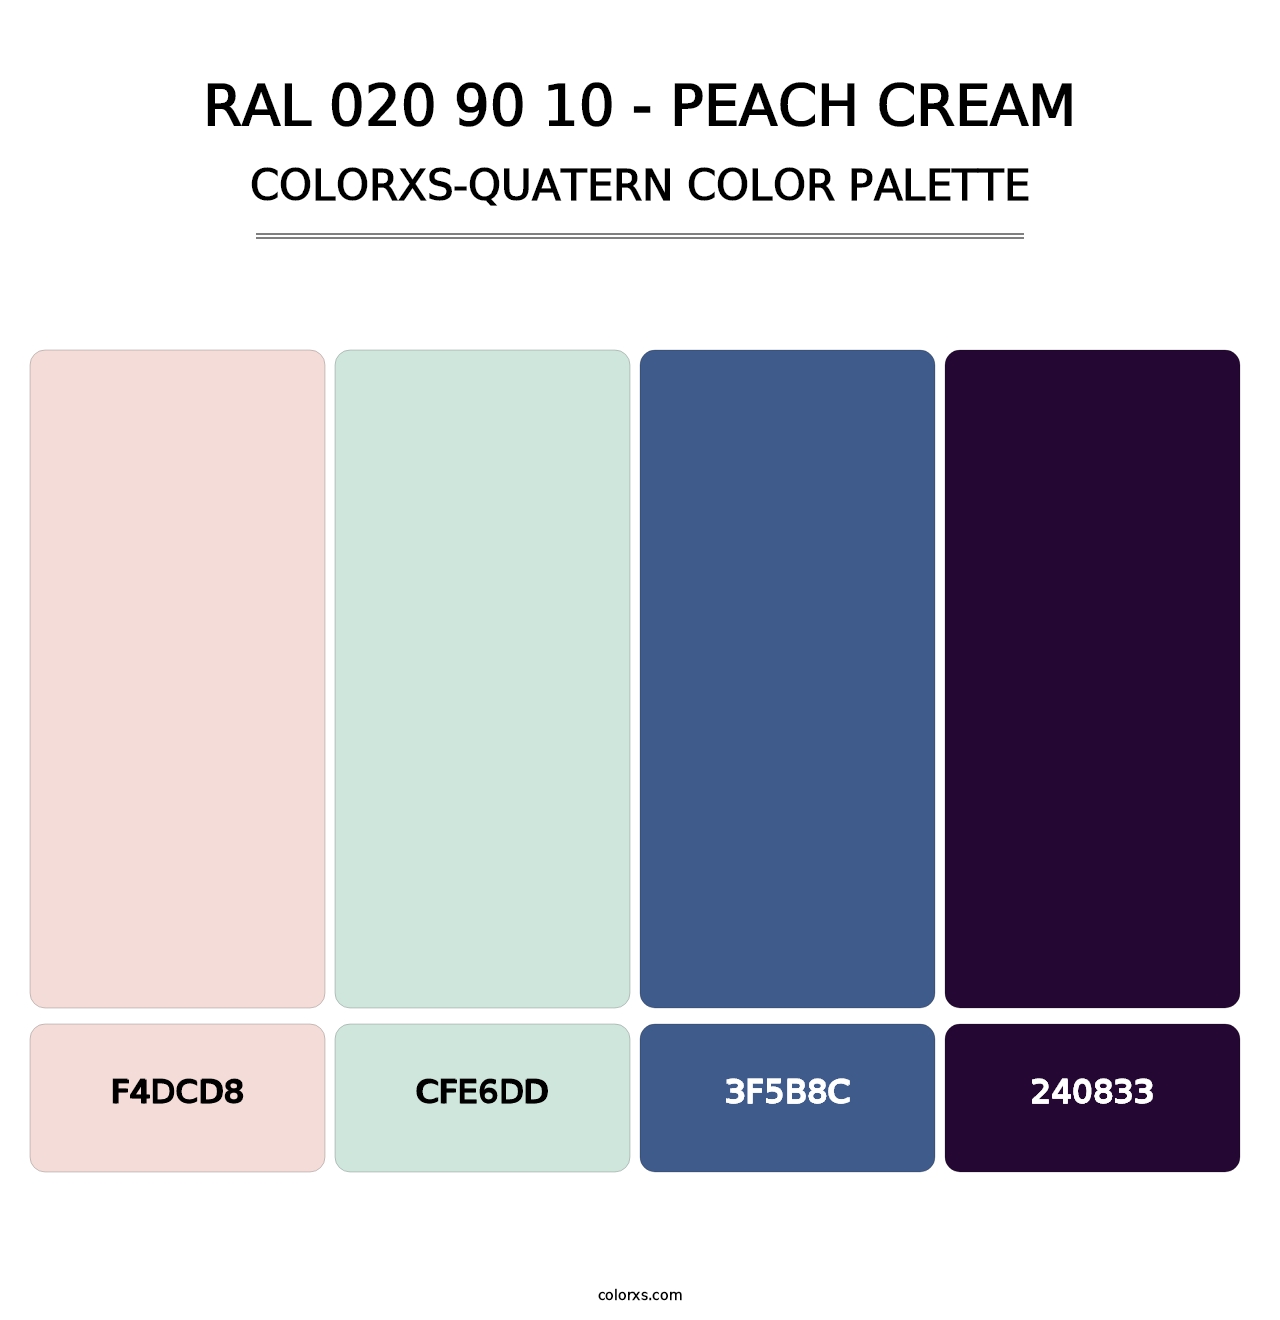 RAL 020 90 10 - Peach Cream - Colorxs Quatern Palette